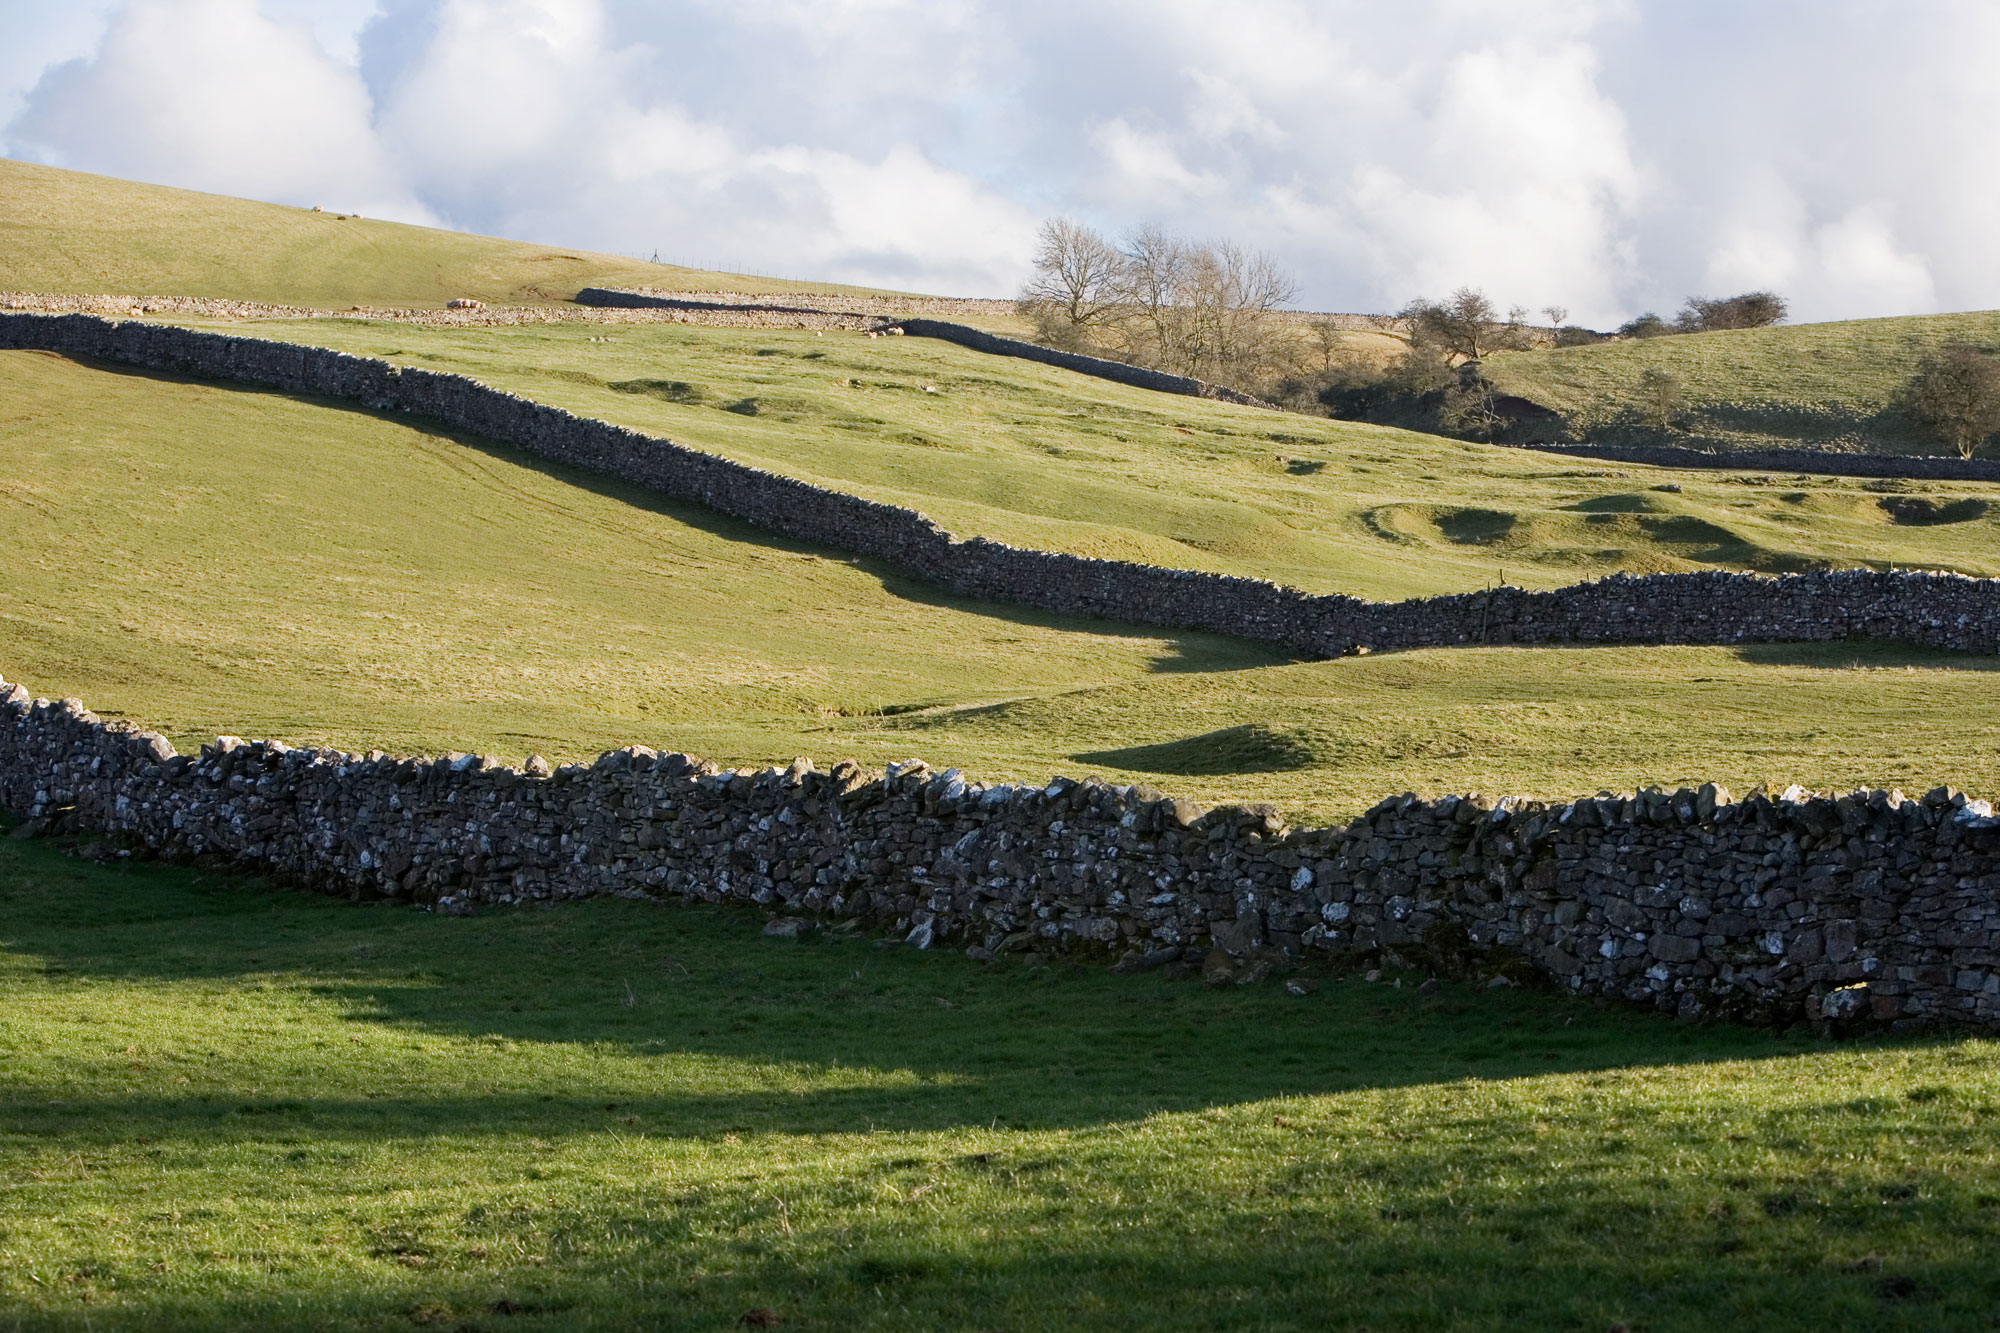 Drystone walls in Cumbria